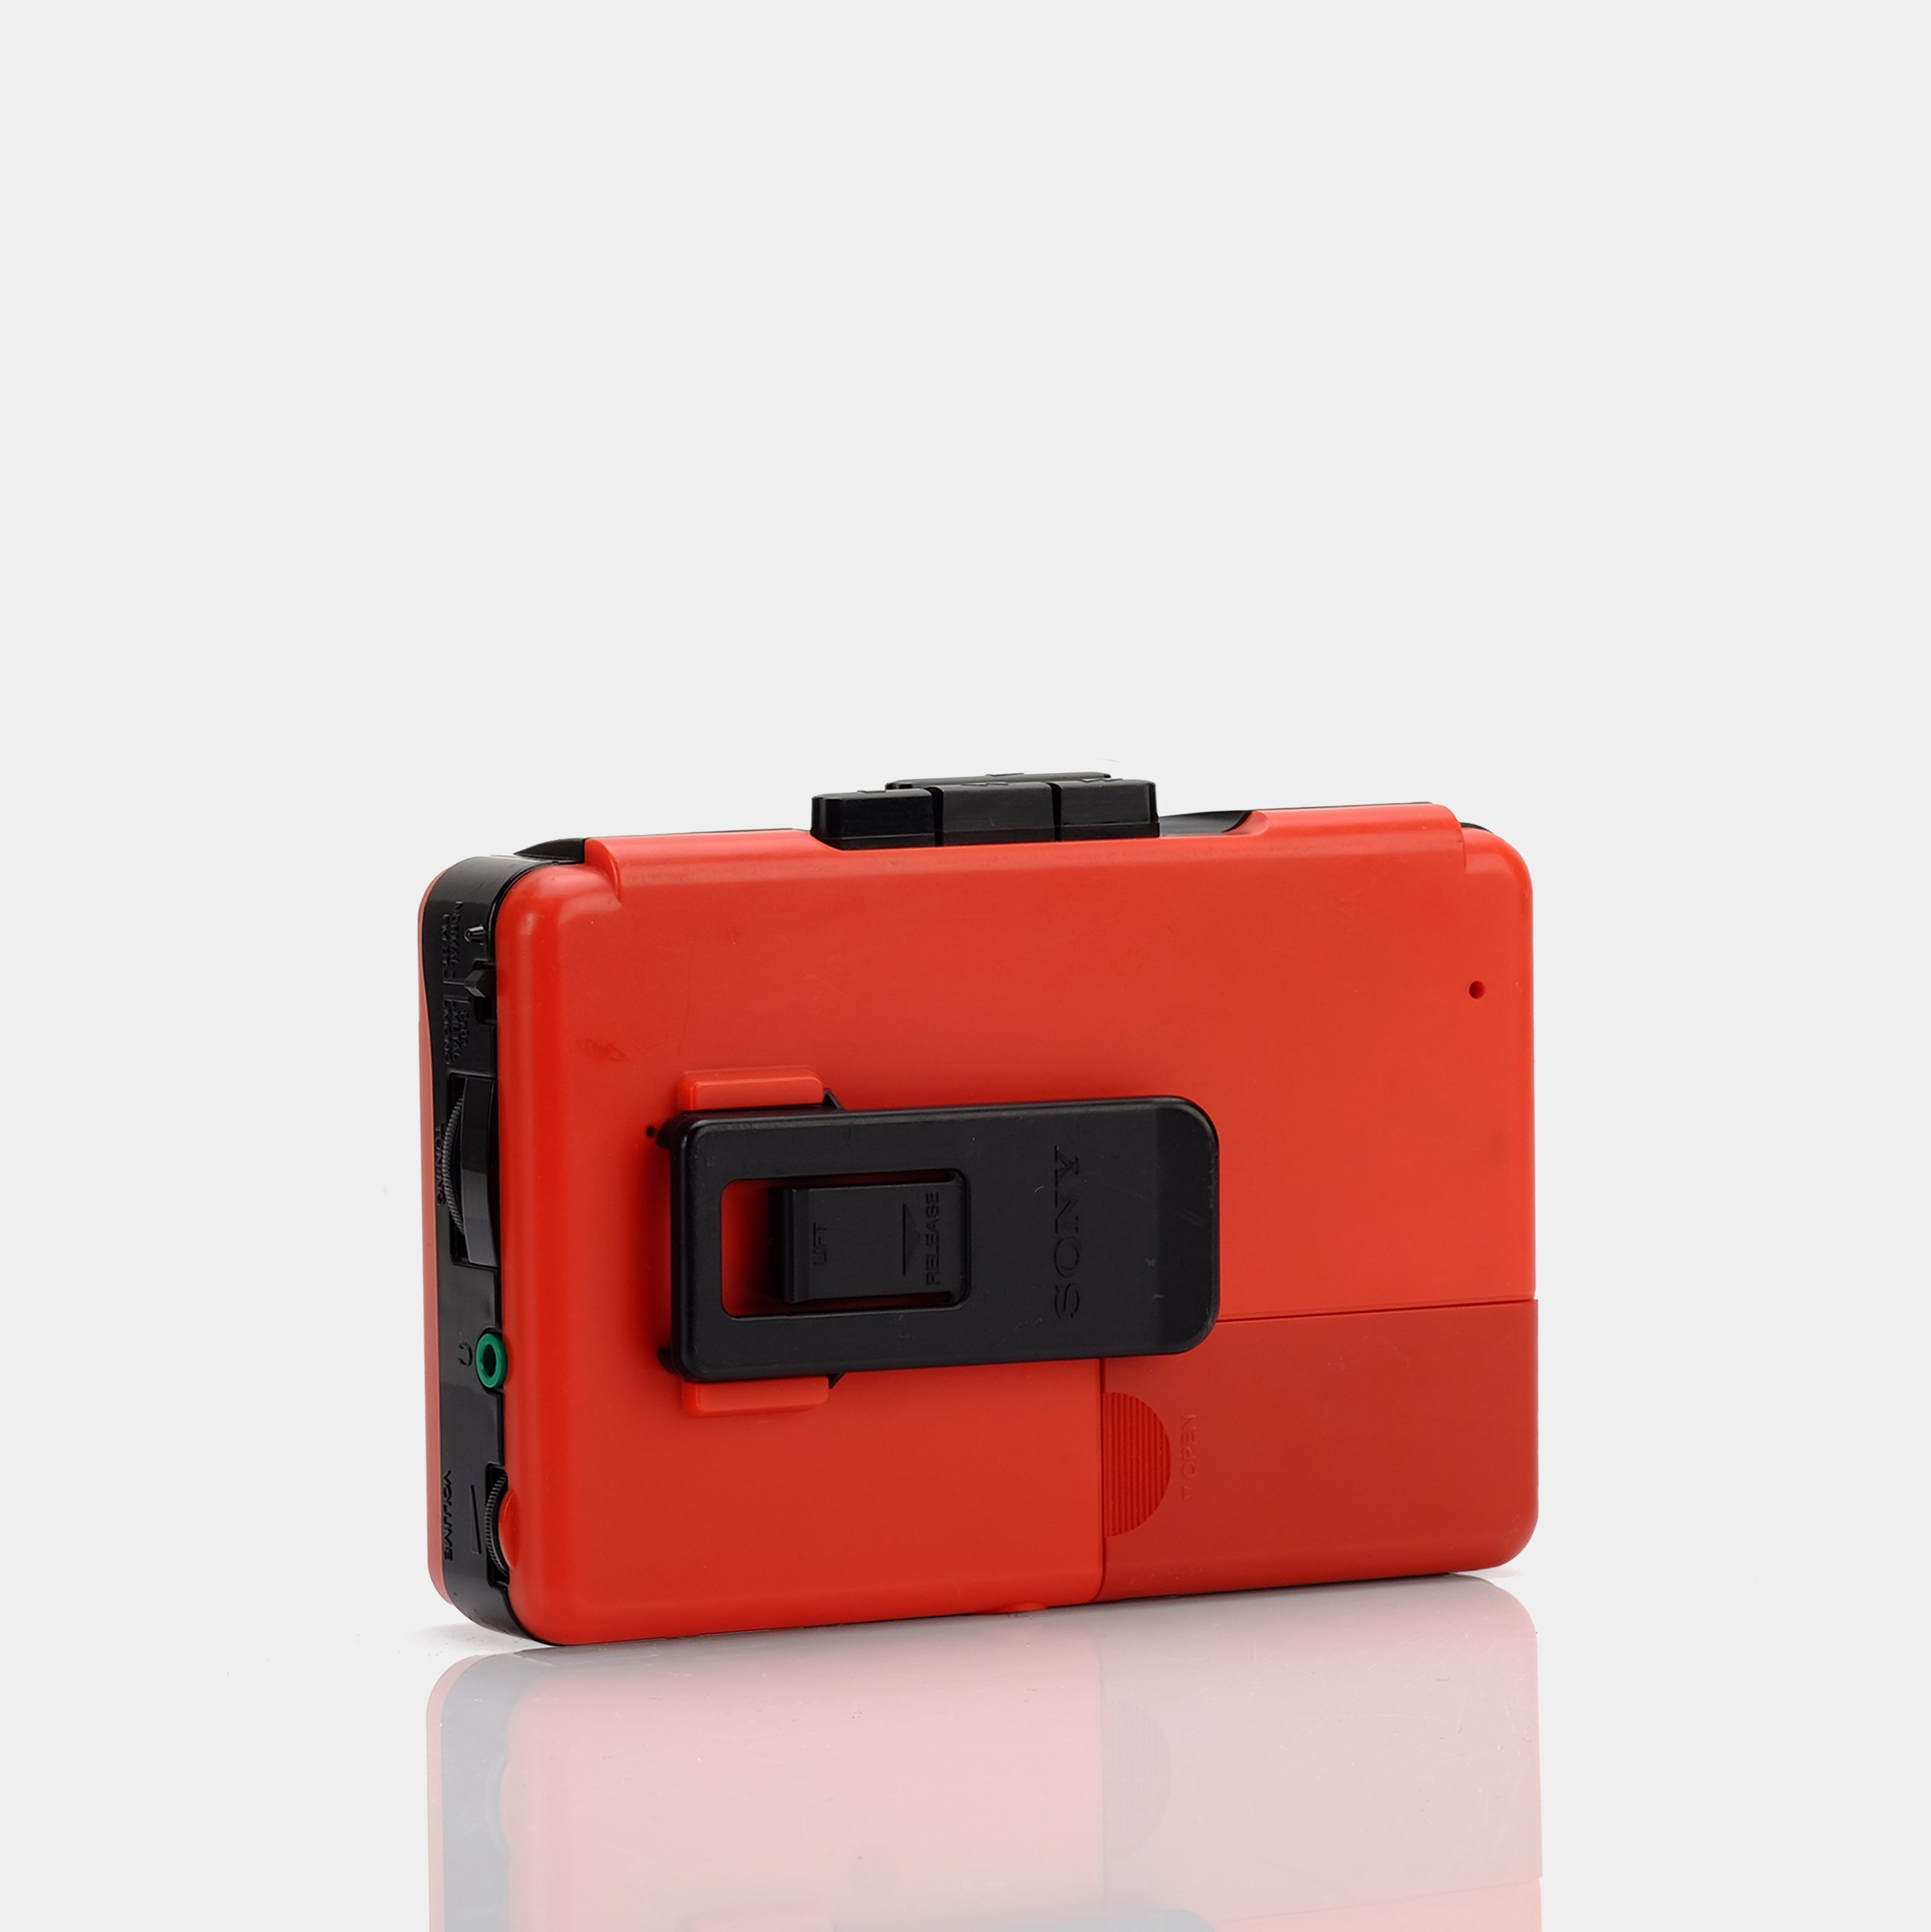 Sony Walkman WM-BF22 Red AM/FM Portable Cassette Player